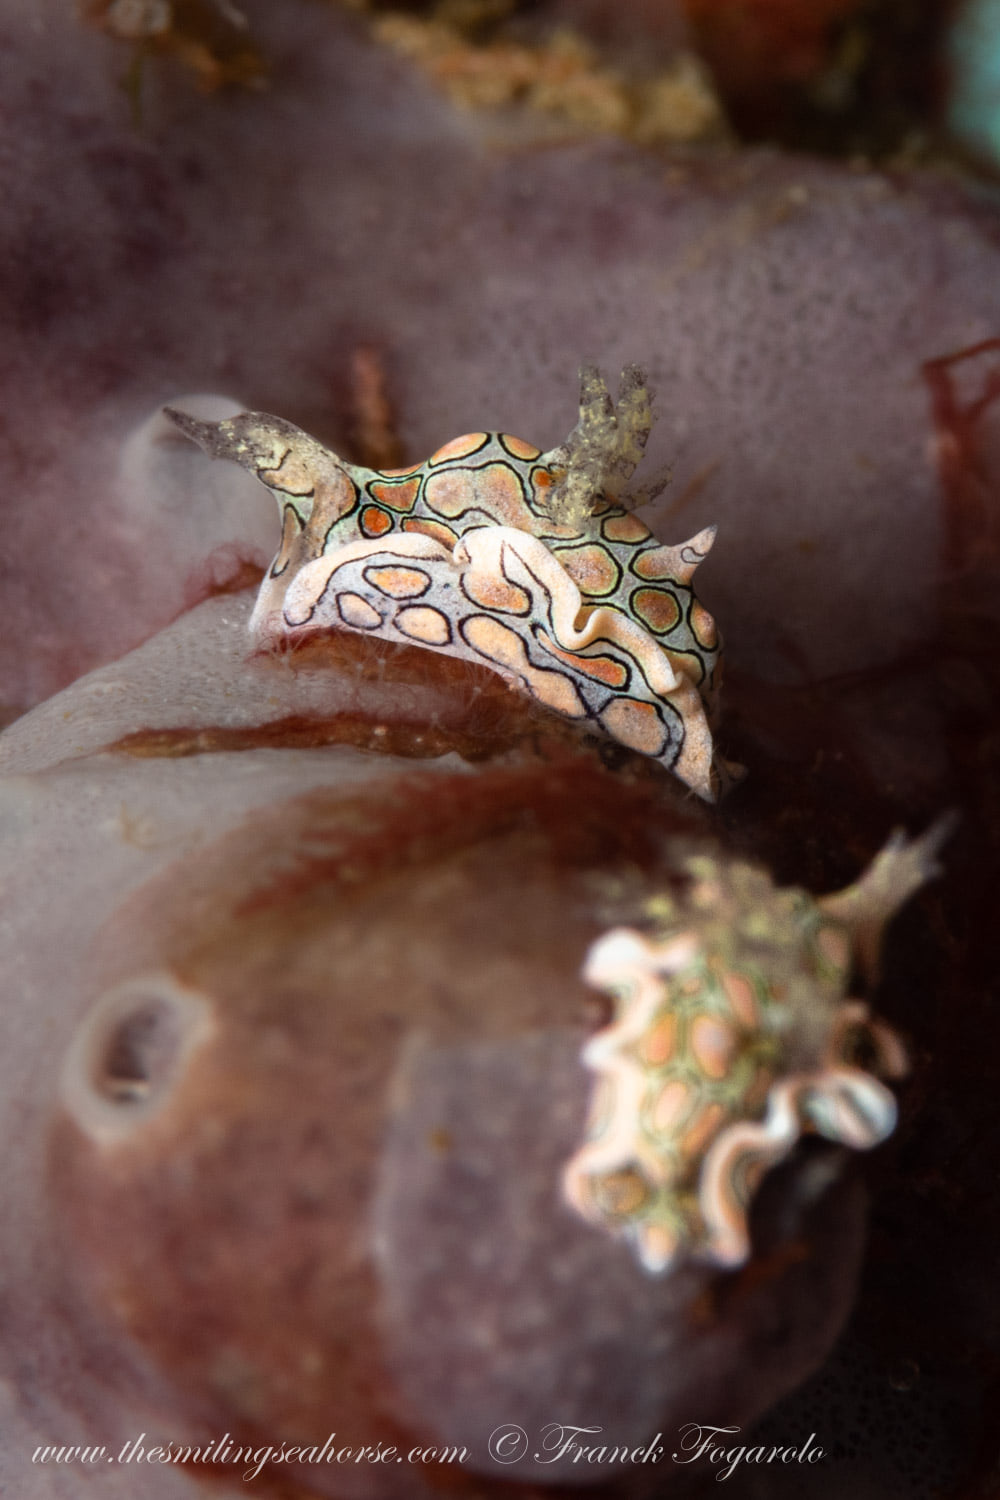 Batwing sea slugs